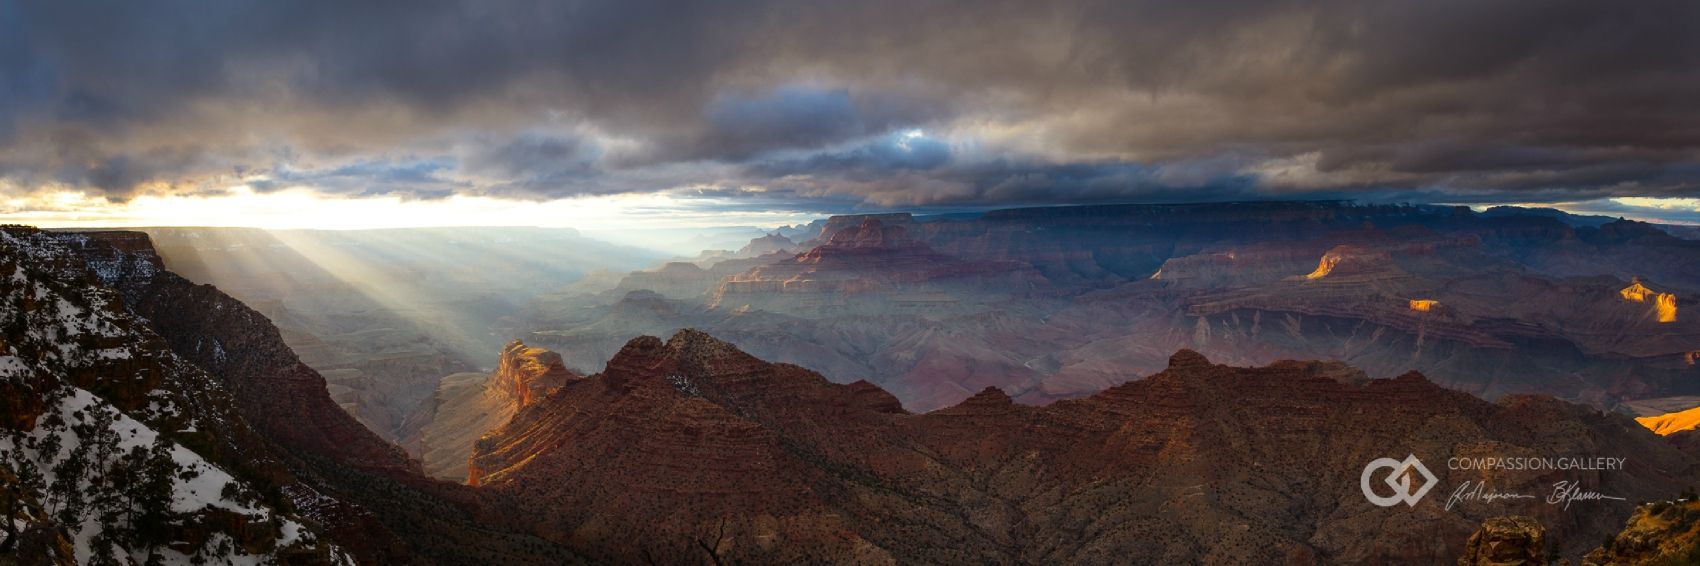 Photo of Grand Canyon, Arizona